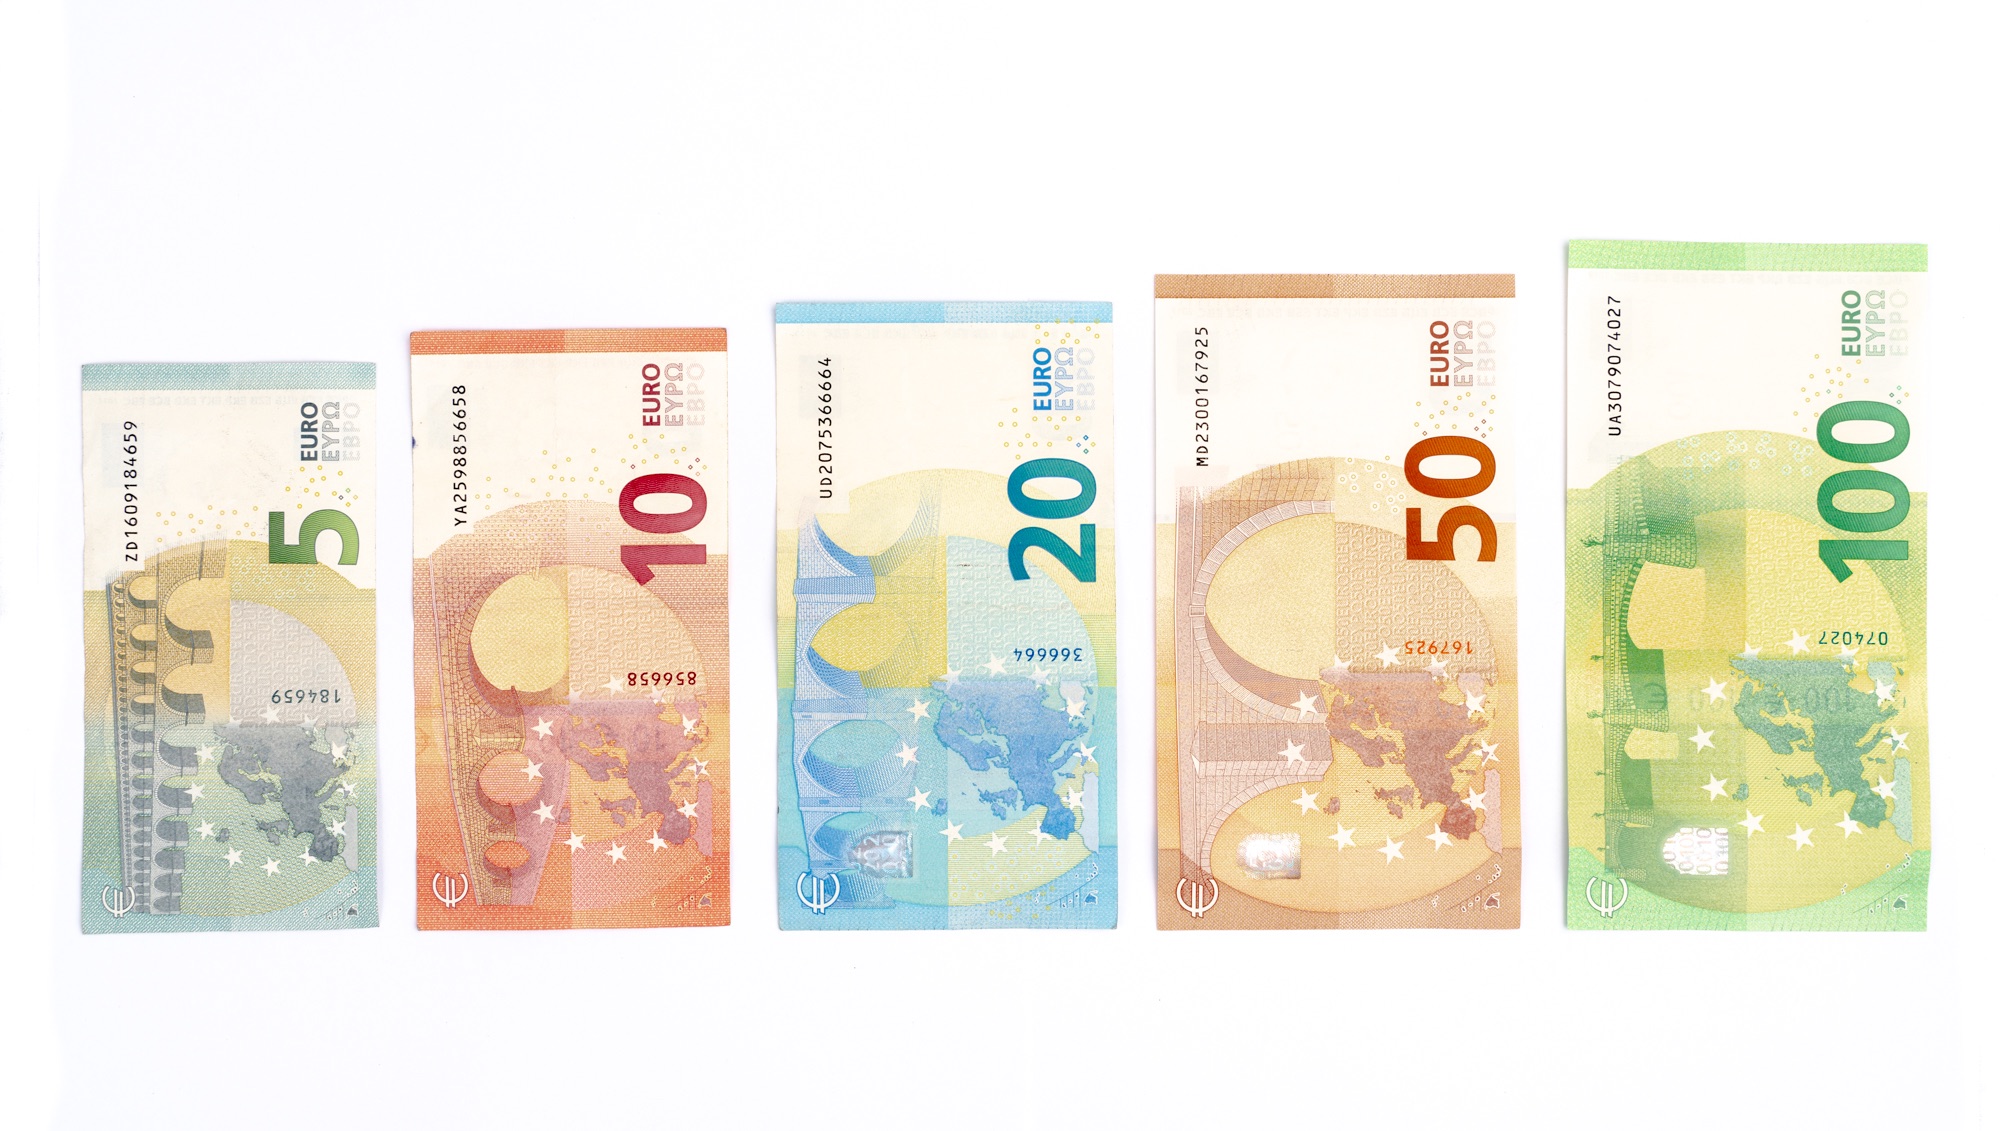 The Best ways to take money to Europe - 2 - Buy Euro in Australia